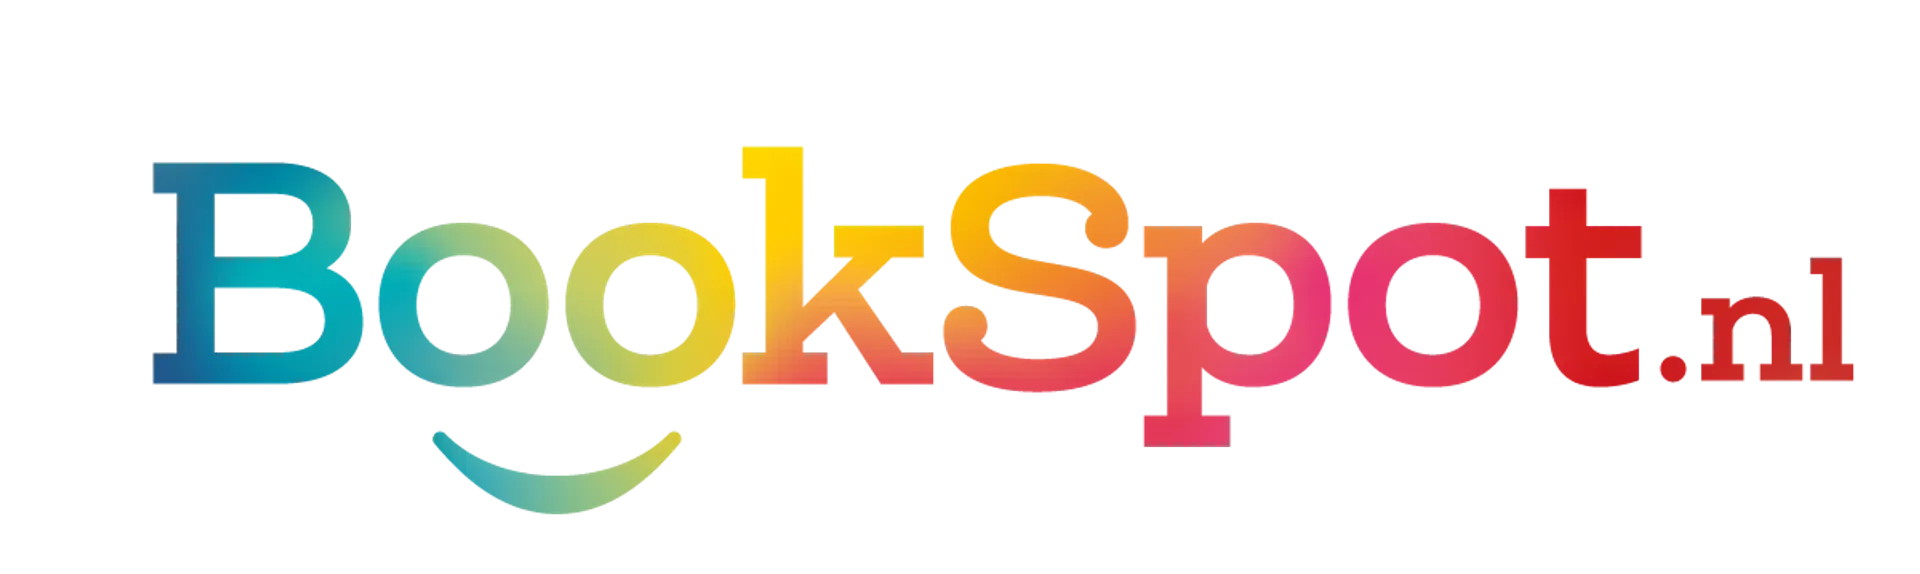 BOOKSPOT logo